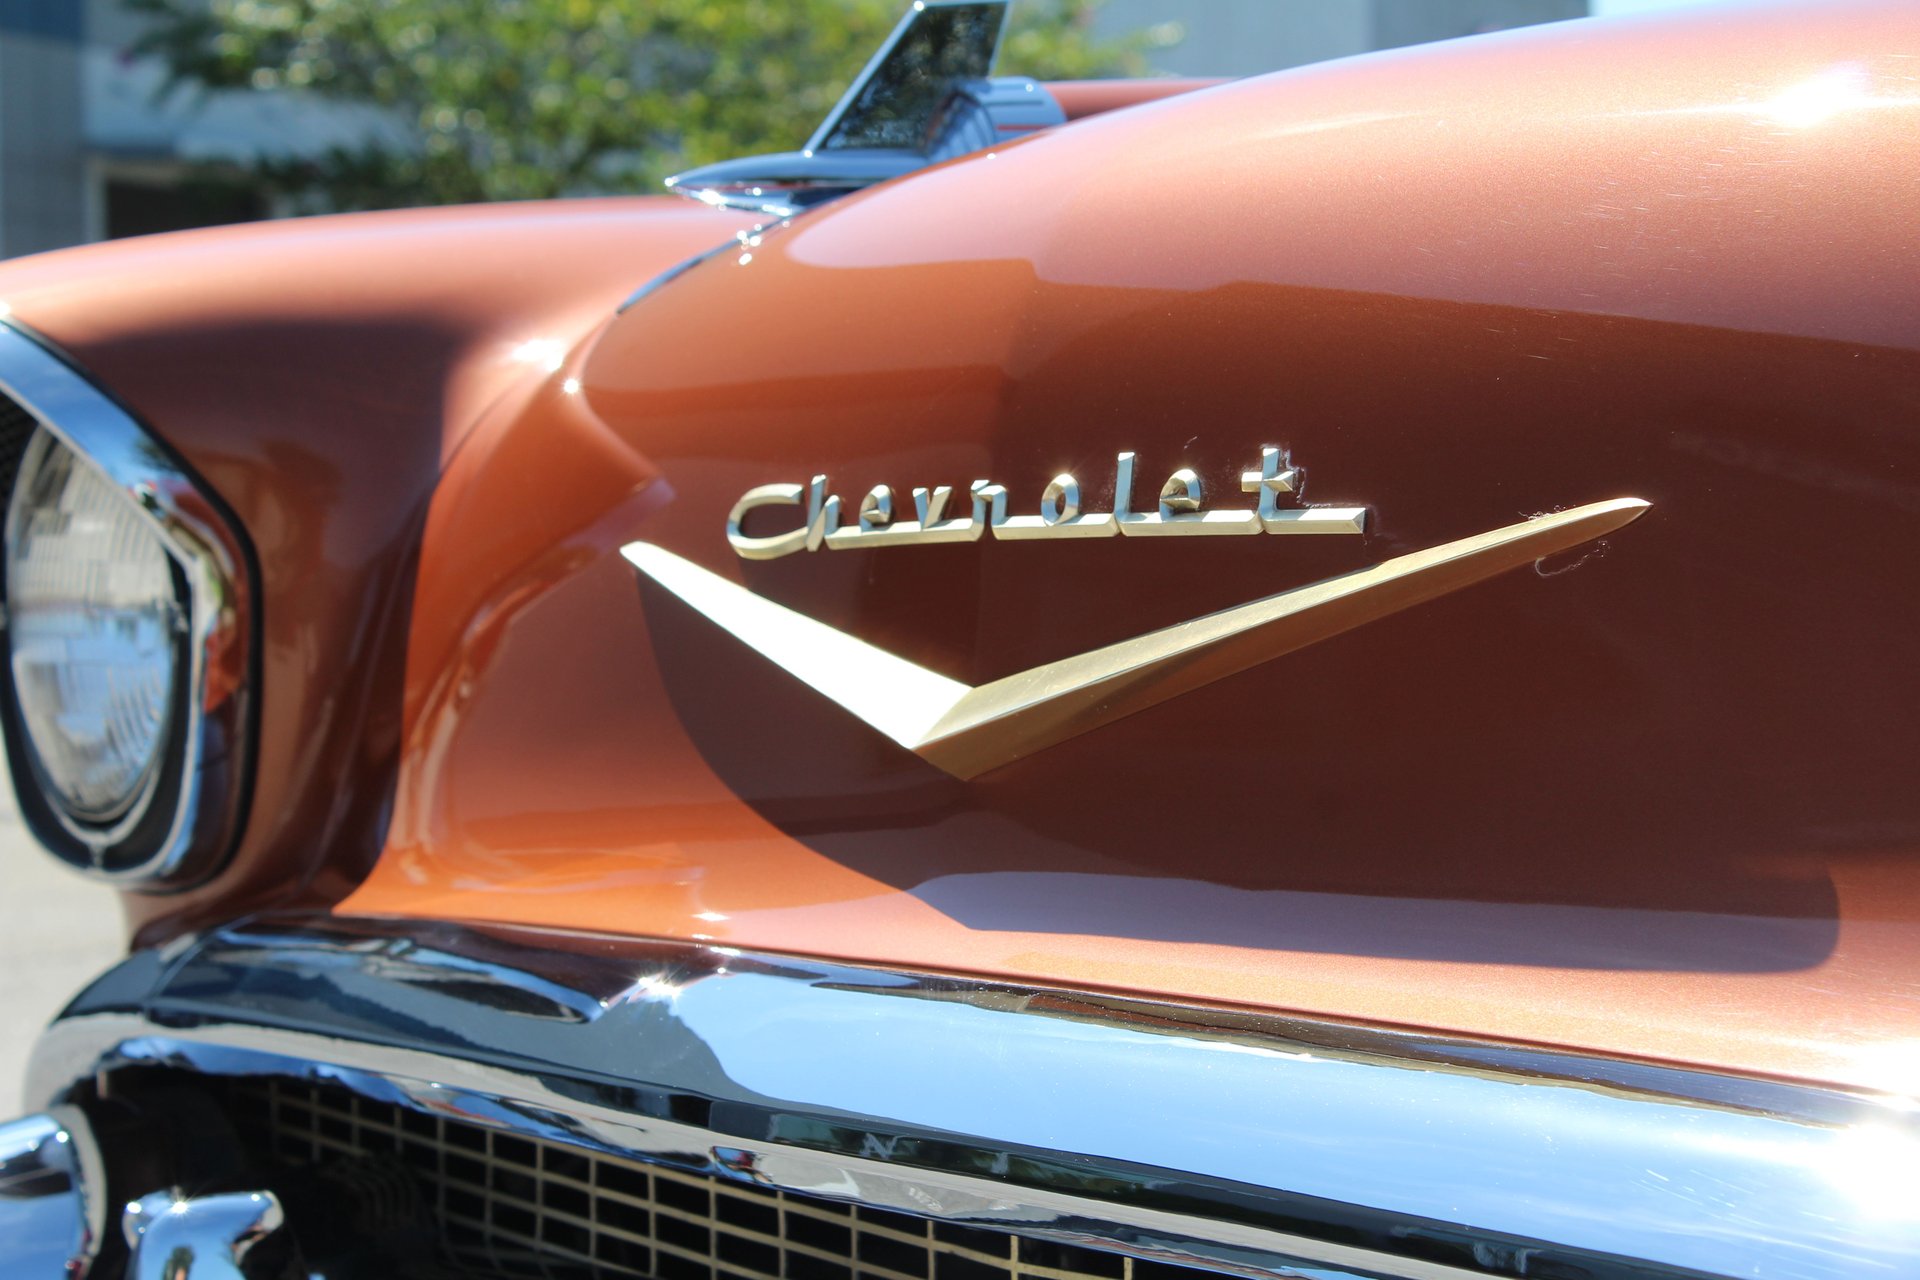 For Sale 1957 Chevrolet Belair